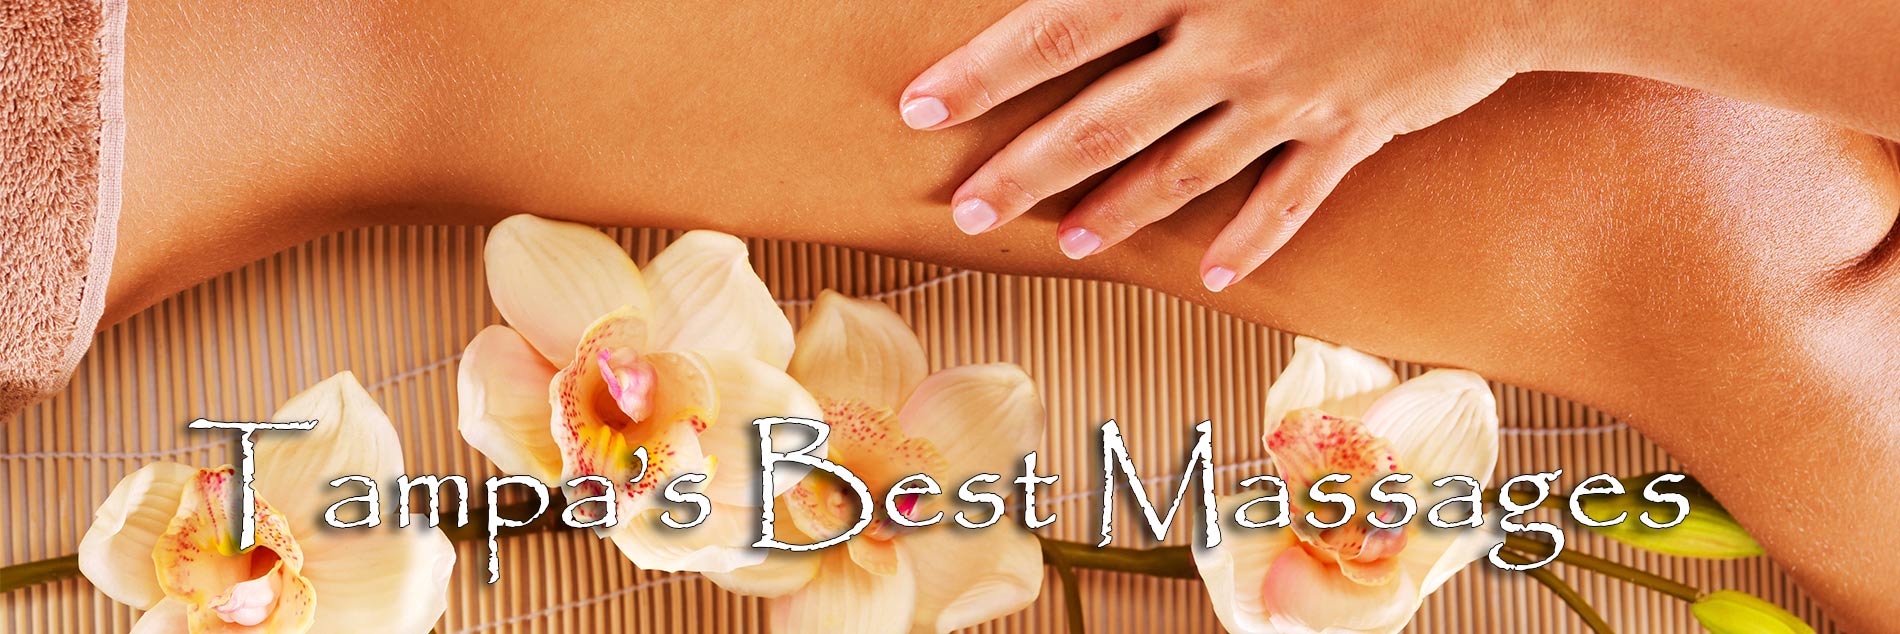 Tampa's Best Massages